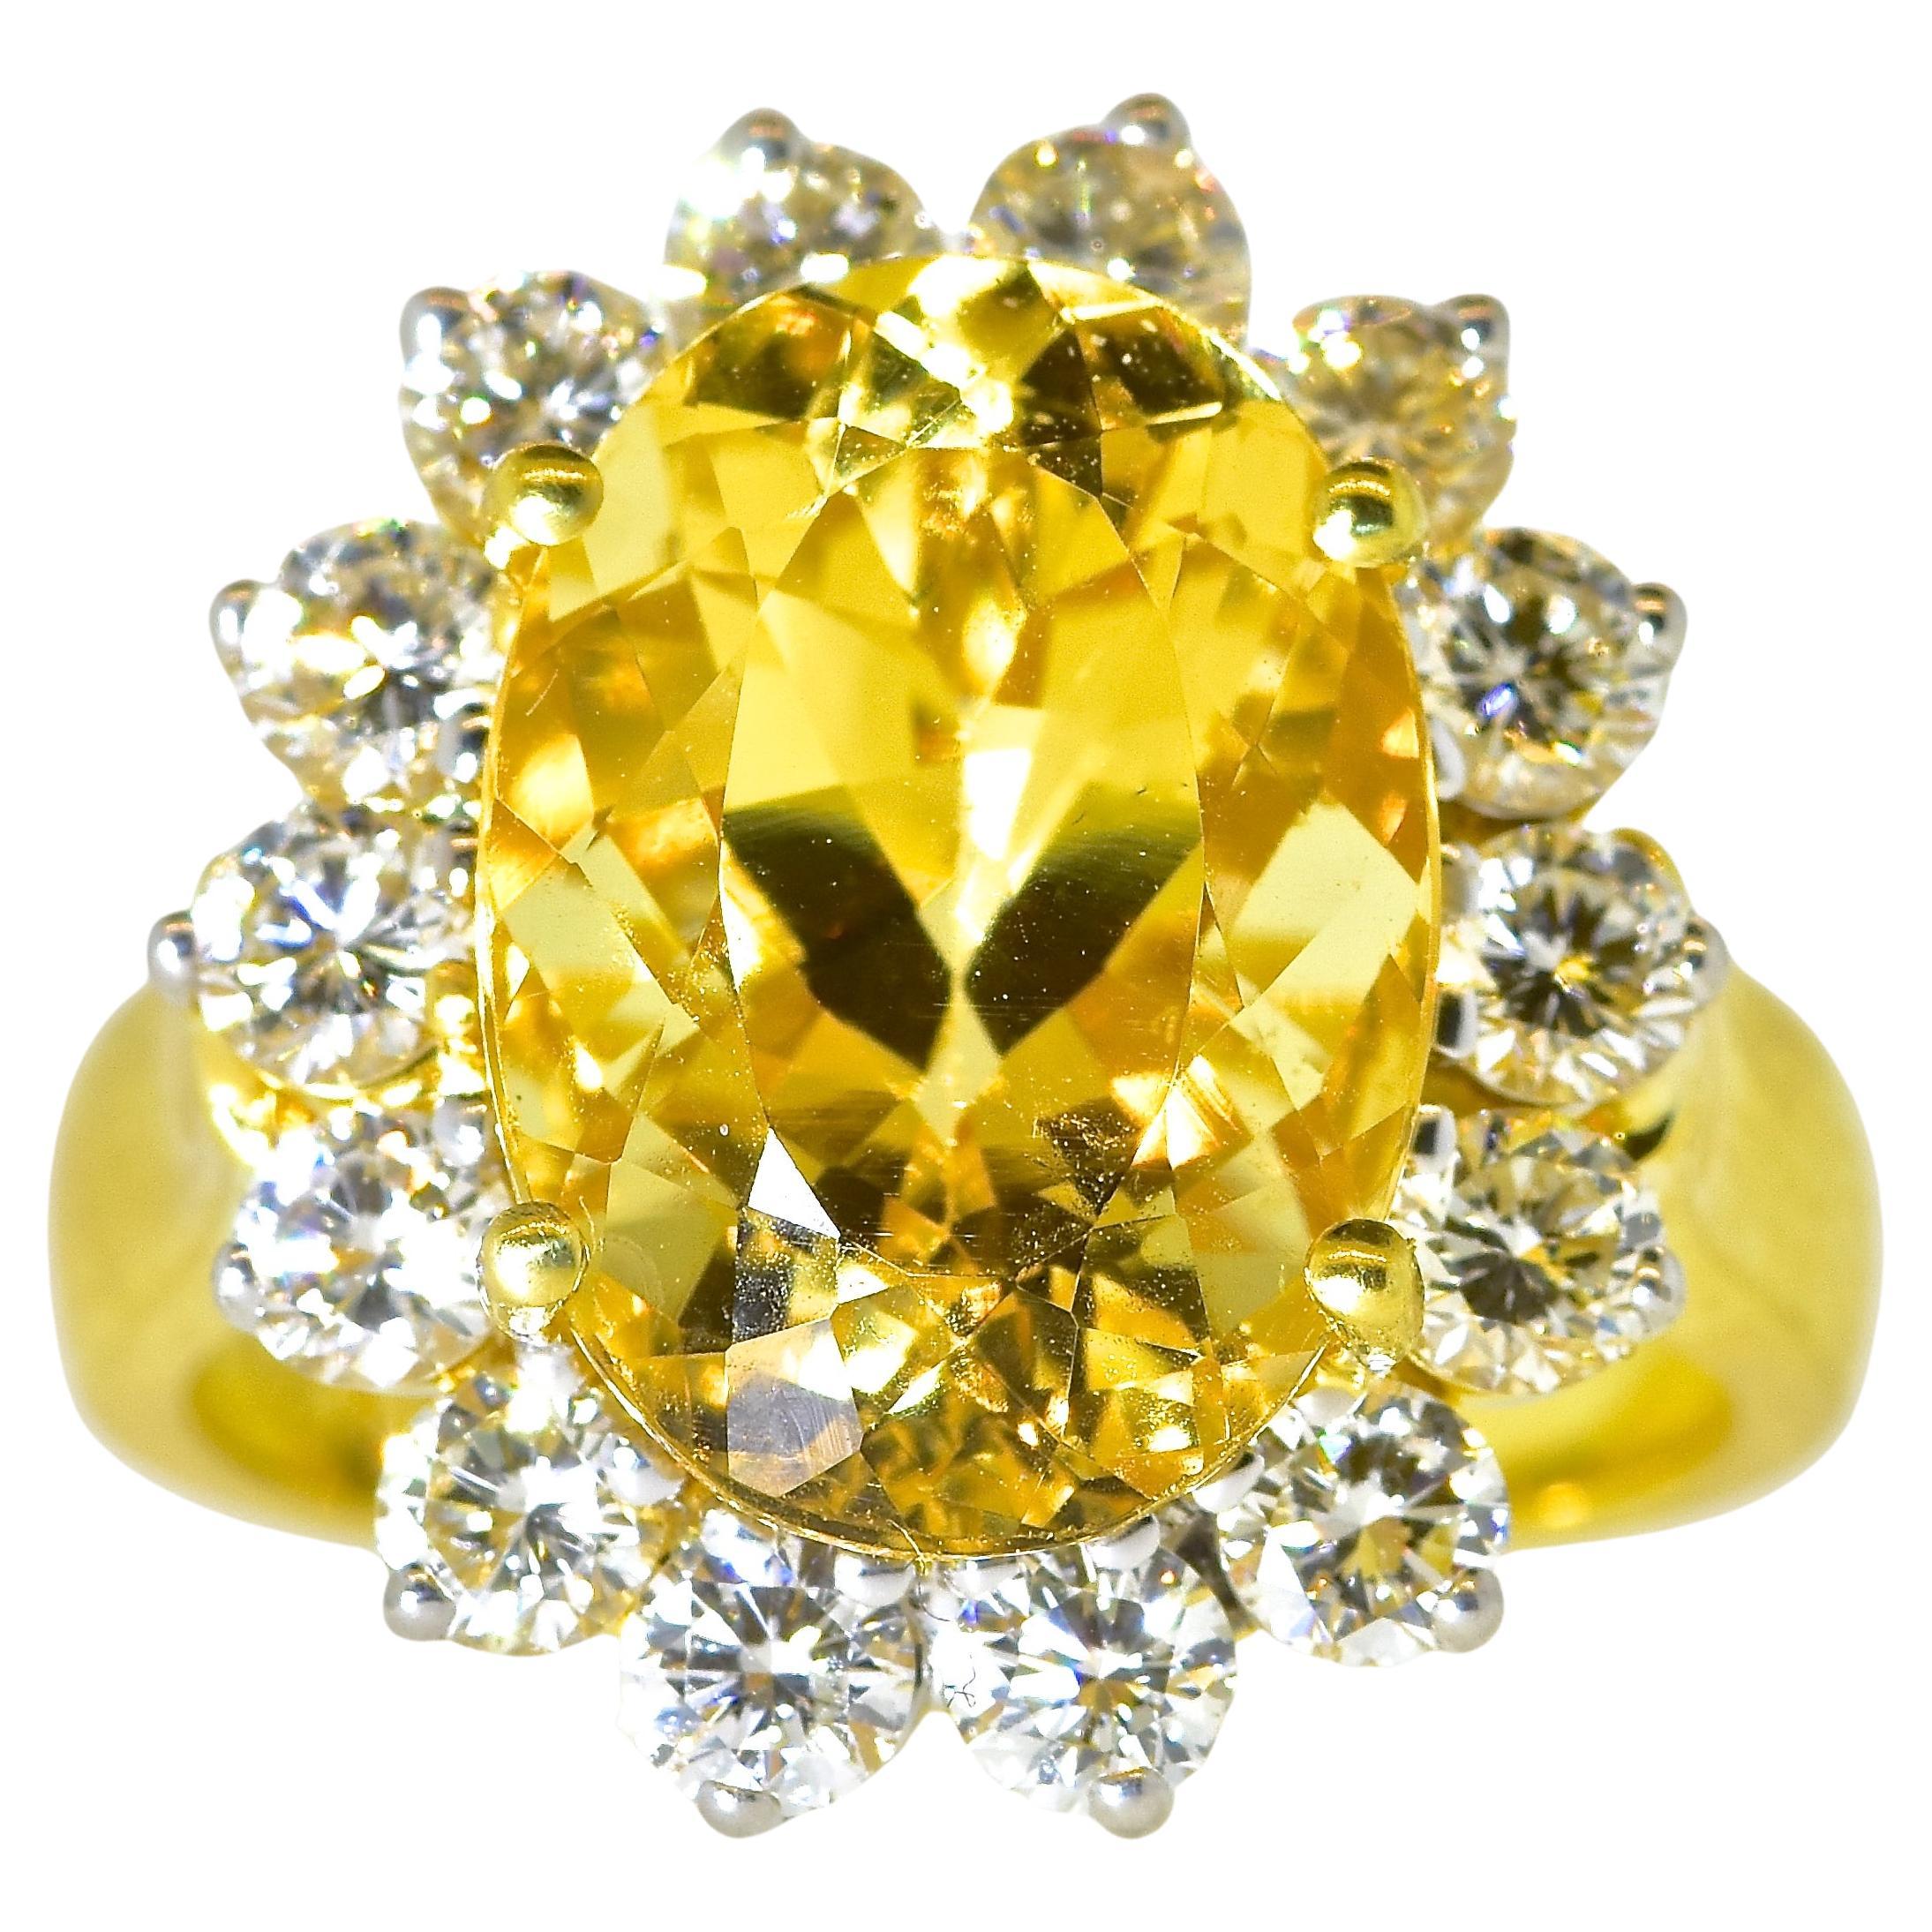 18K yellow gold, Diamond and  natural GIA Certified Golden Yellow Beryl Ring